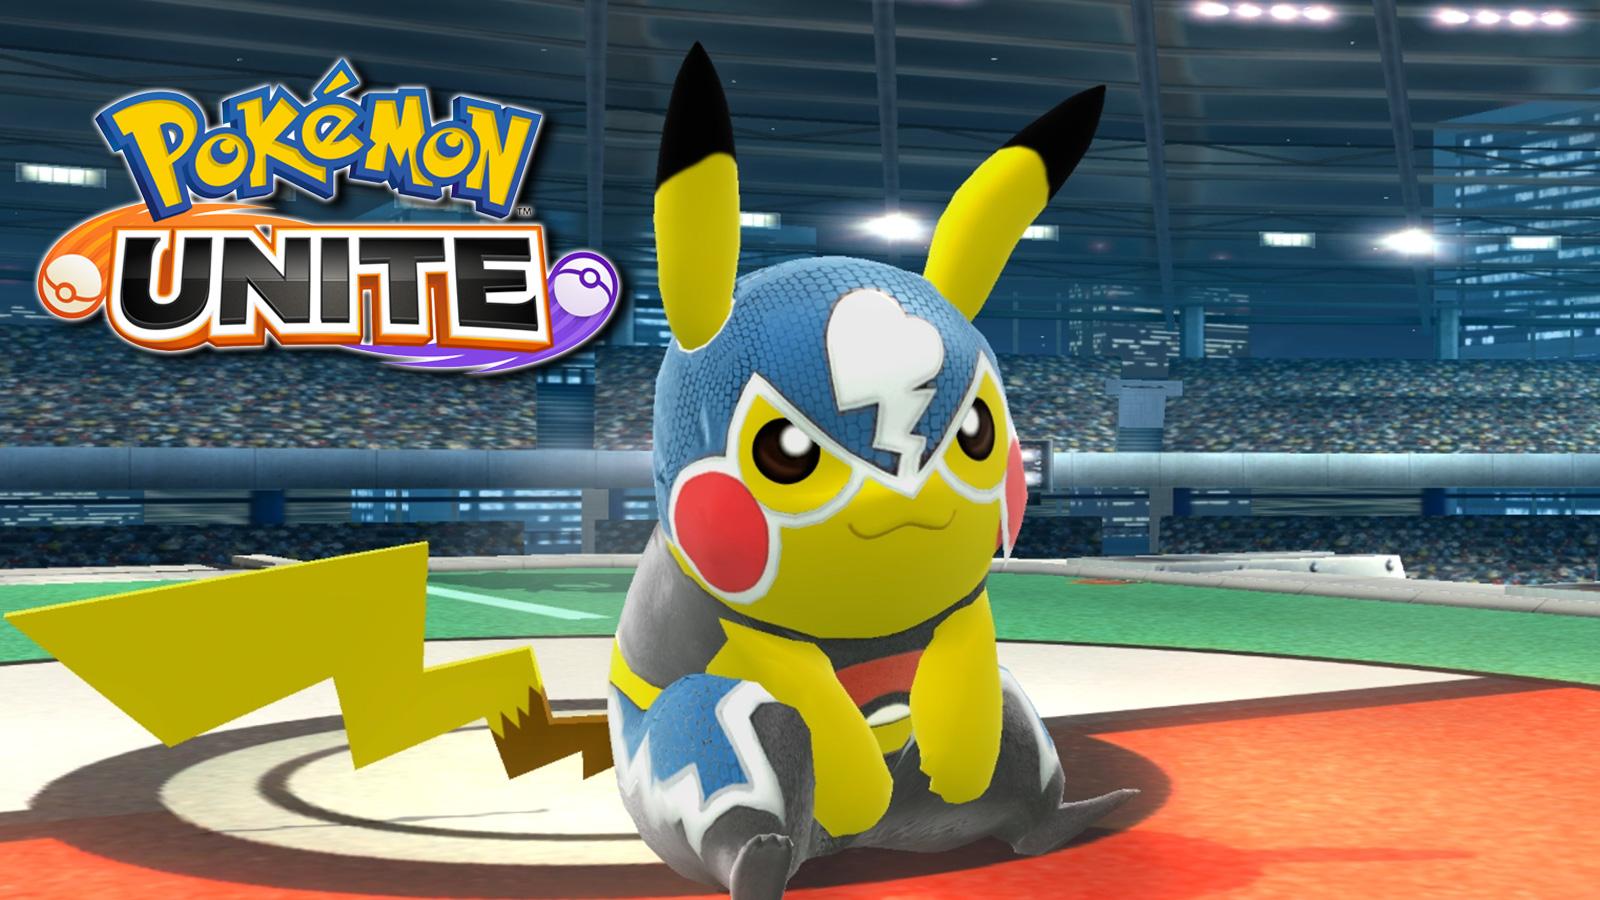 Screenshot of Pikachu Libre from Pokken Tournament next to Unite logo.